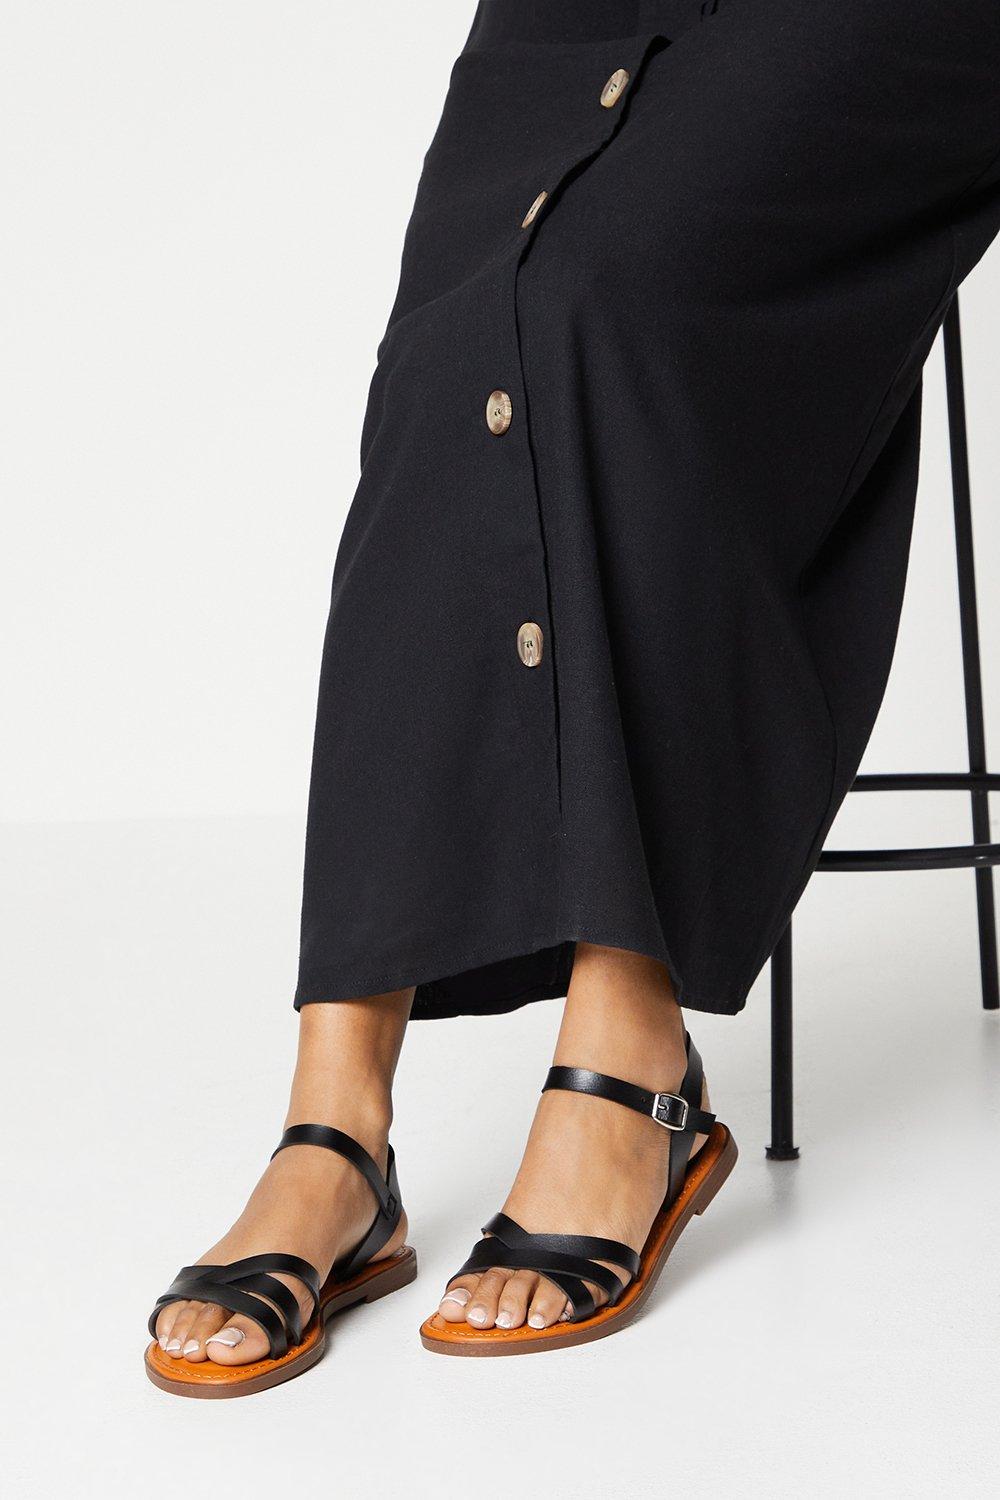 Women’s Good For The Sole: Melanie Comfort Cross Strap Flat Sandals - black - 6